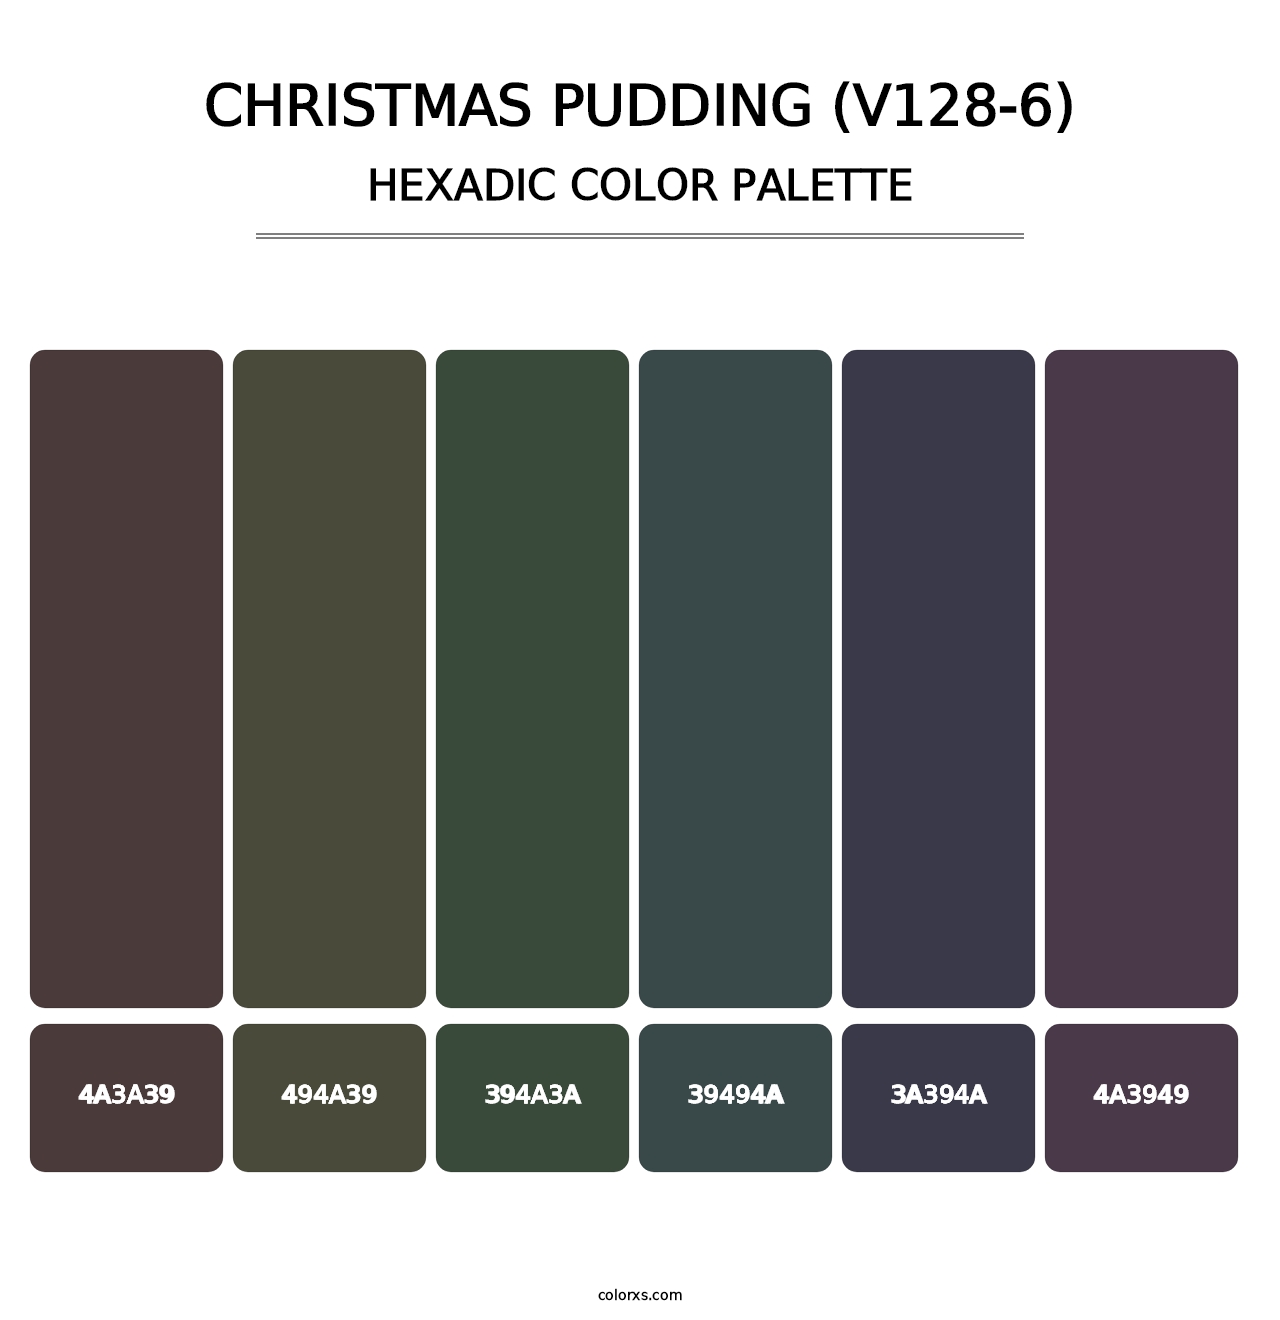 Christmas Pudding (V128-6) - Hexadic Color Palette